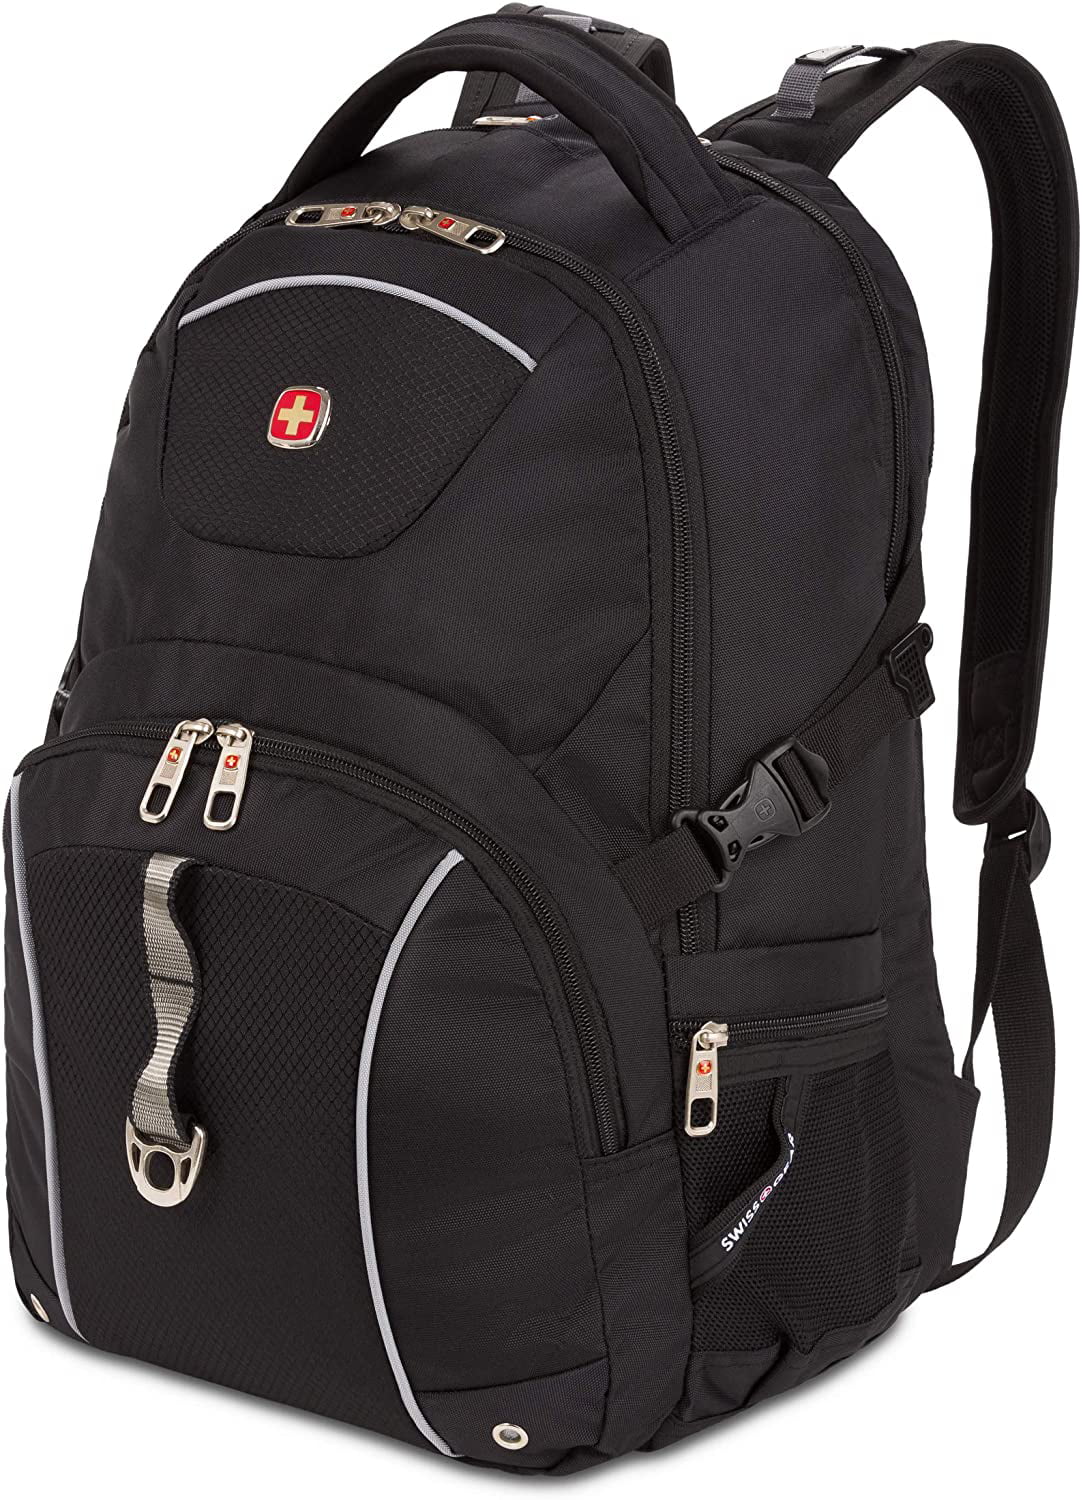 SWISSGEAR 3258 Laptop Backpack | Fits Most 17 Inch Laptops | Secure ...